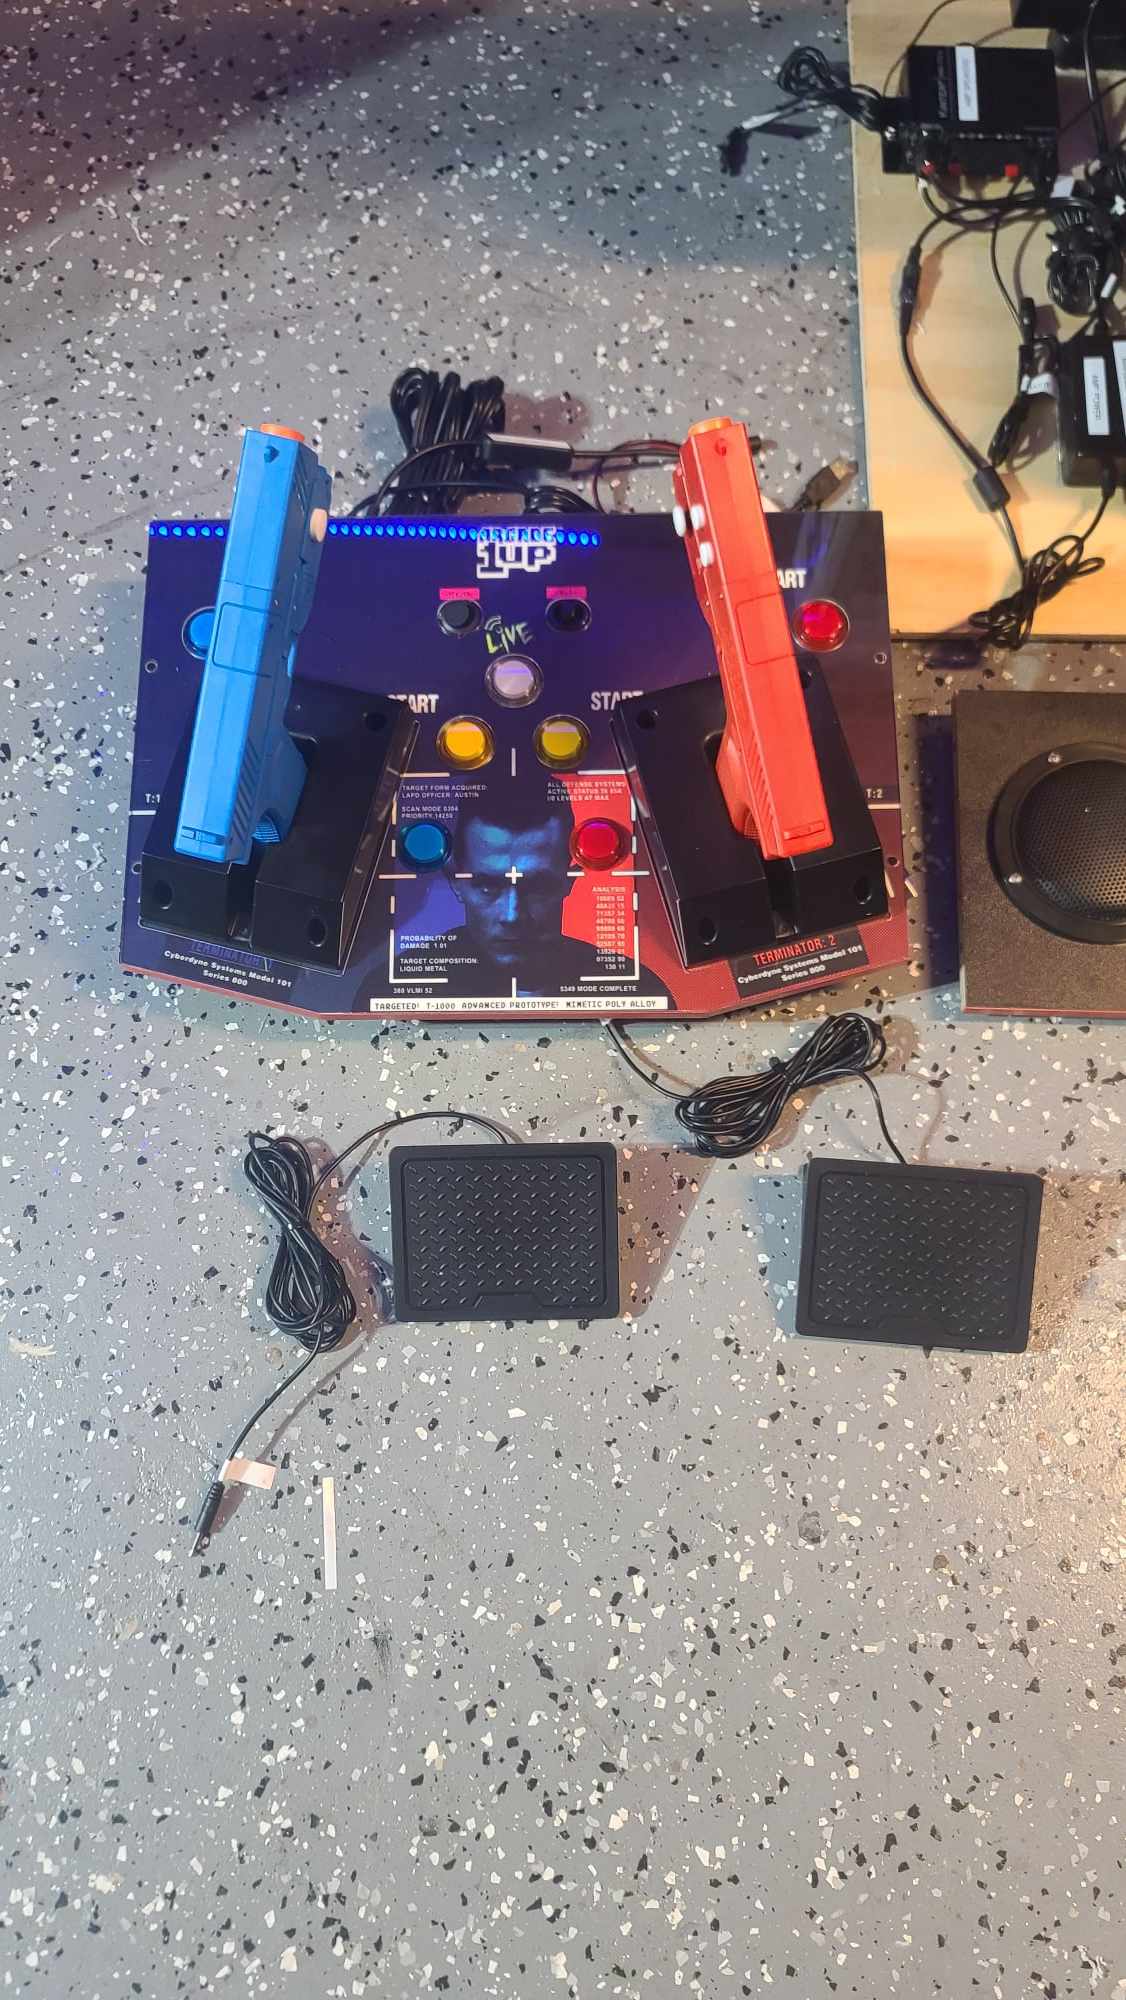 Terminator 2 Arcade 1up Retroshooter Light Gun Premium Mod Kit with pedals (435 light gun games)